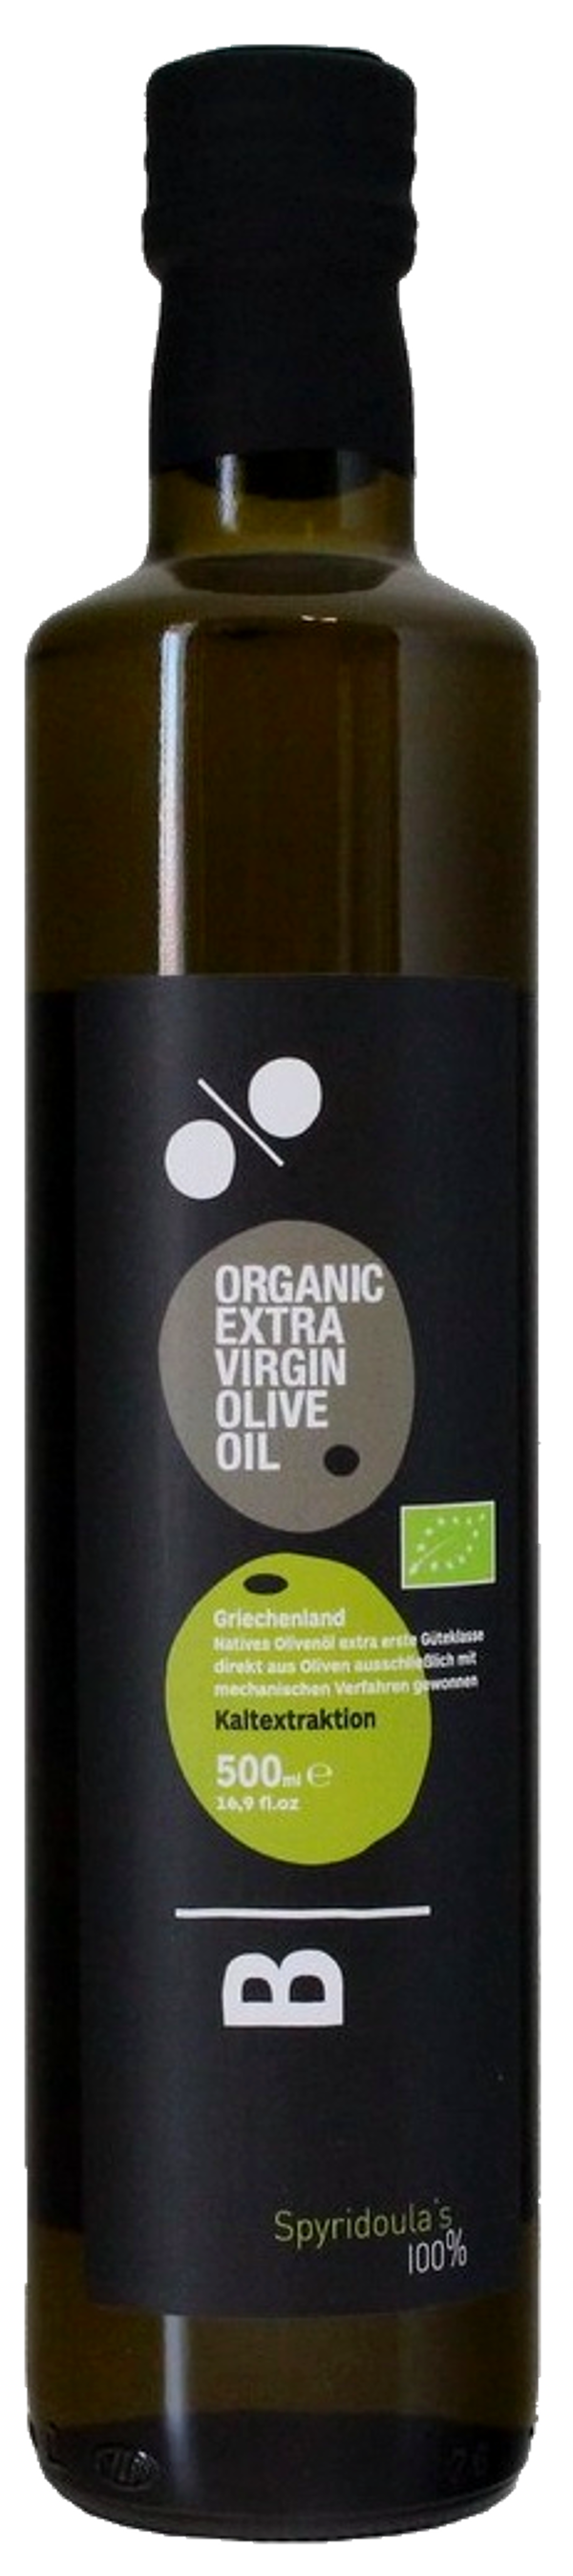 Produktfoto zu Spyridoula´s Olivenöl 500ml